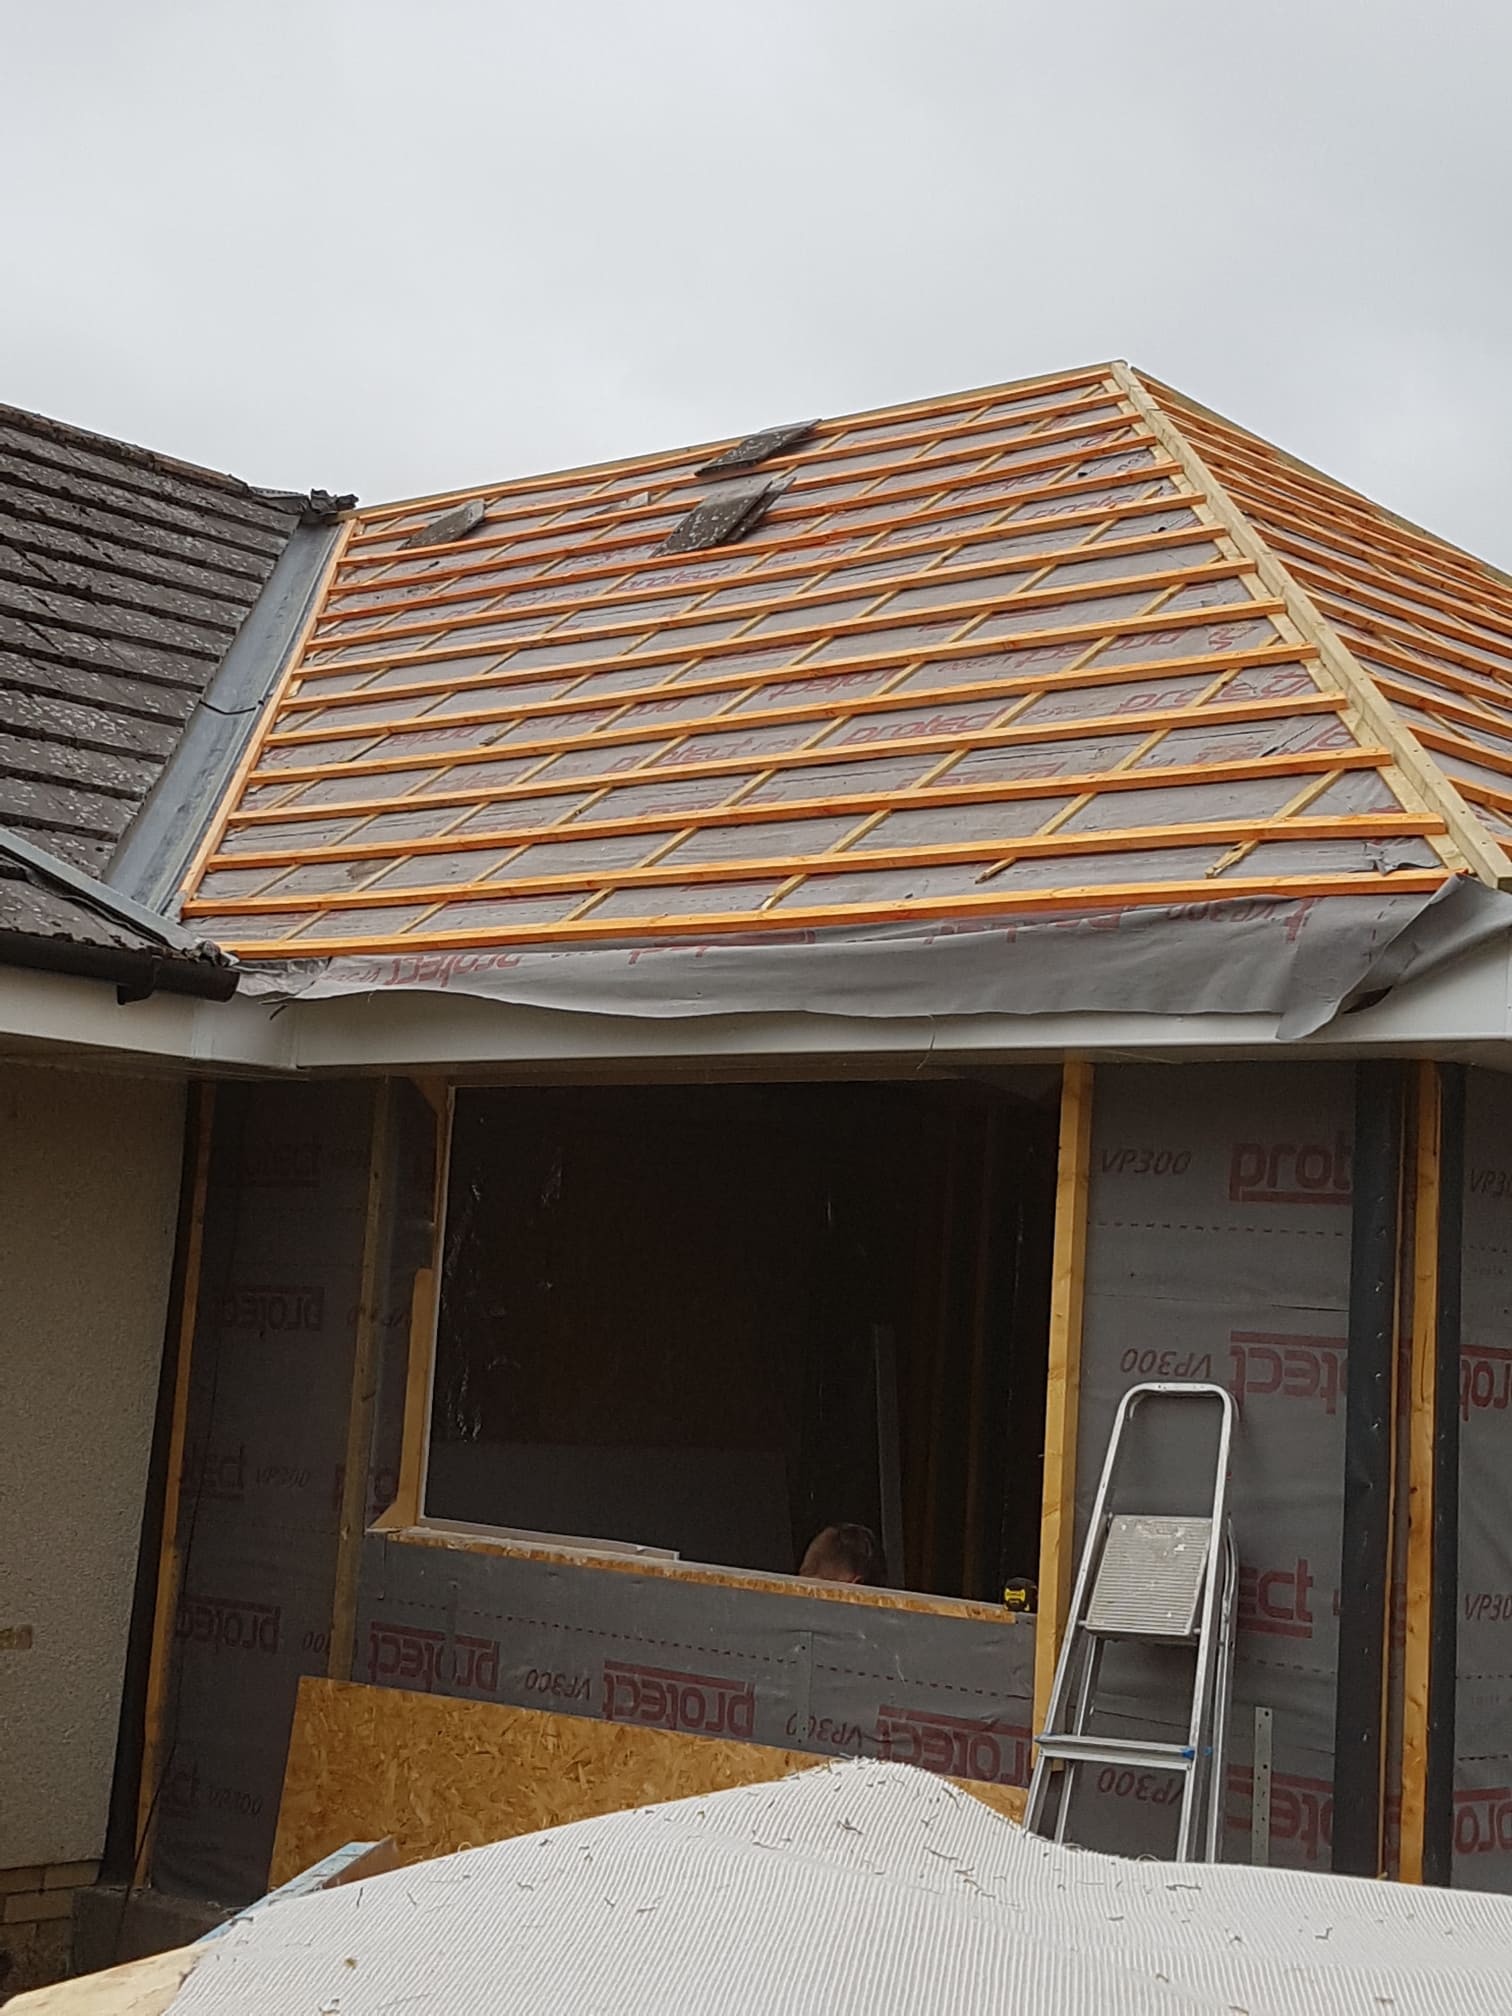 C C's Roof Repairs Lochgelly 01592 869746